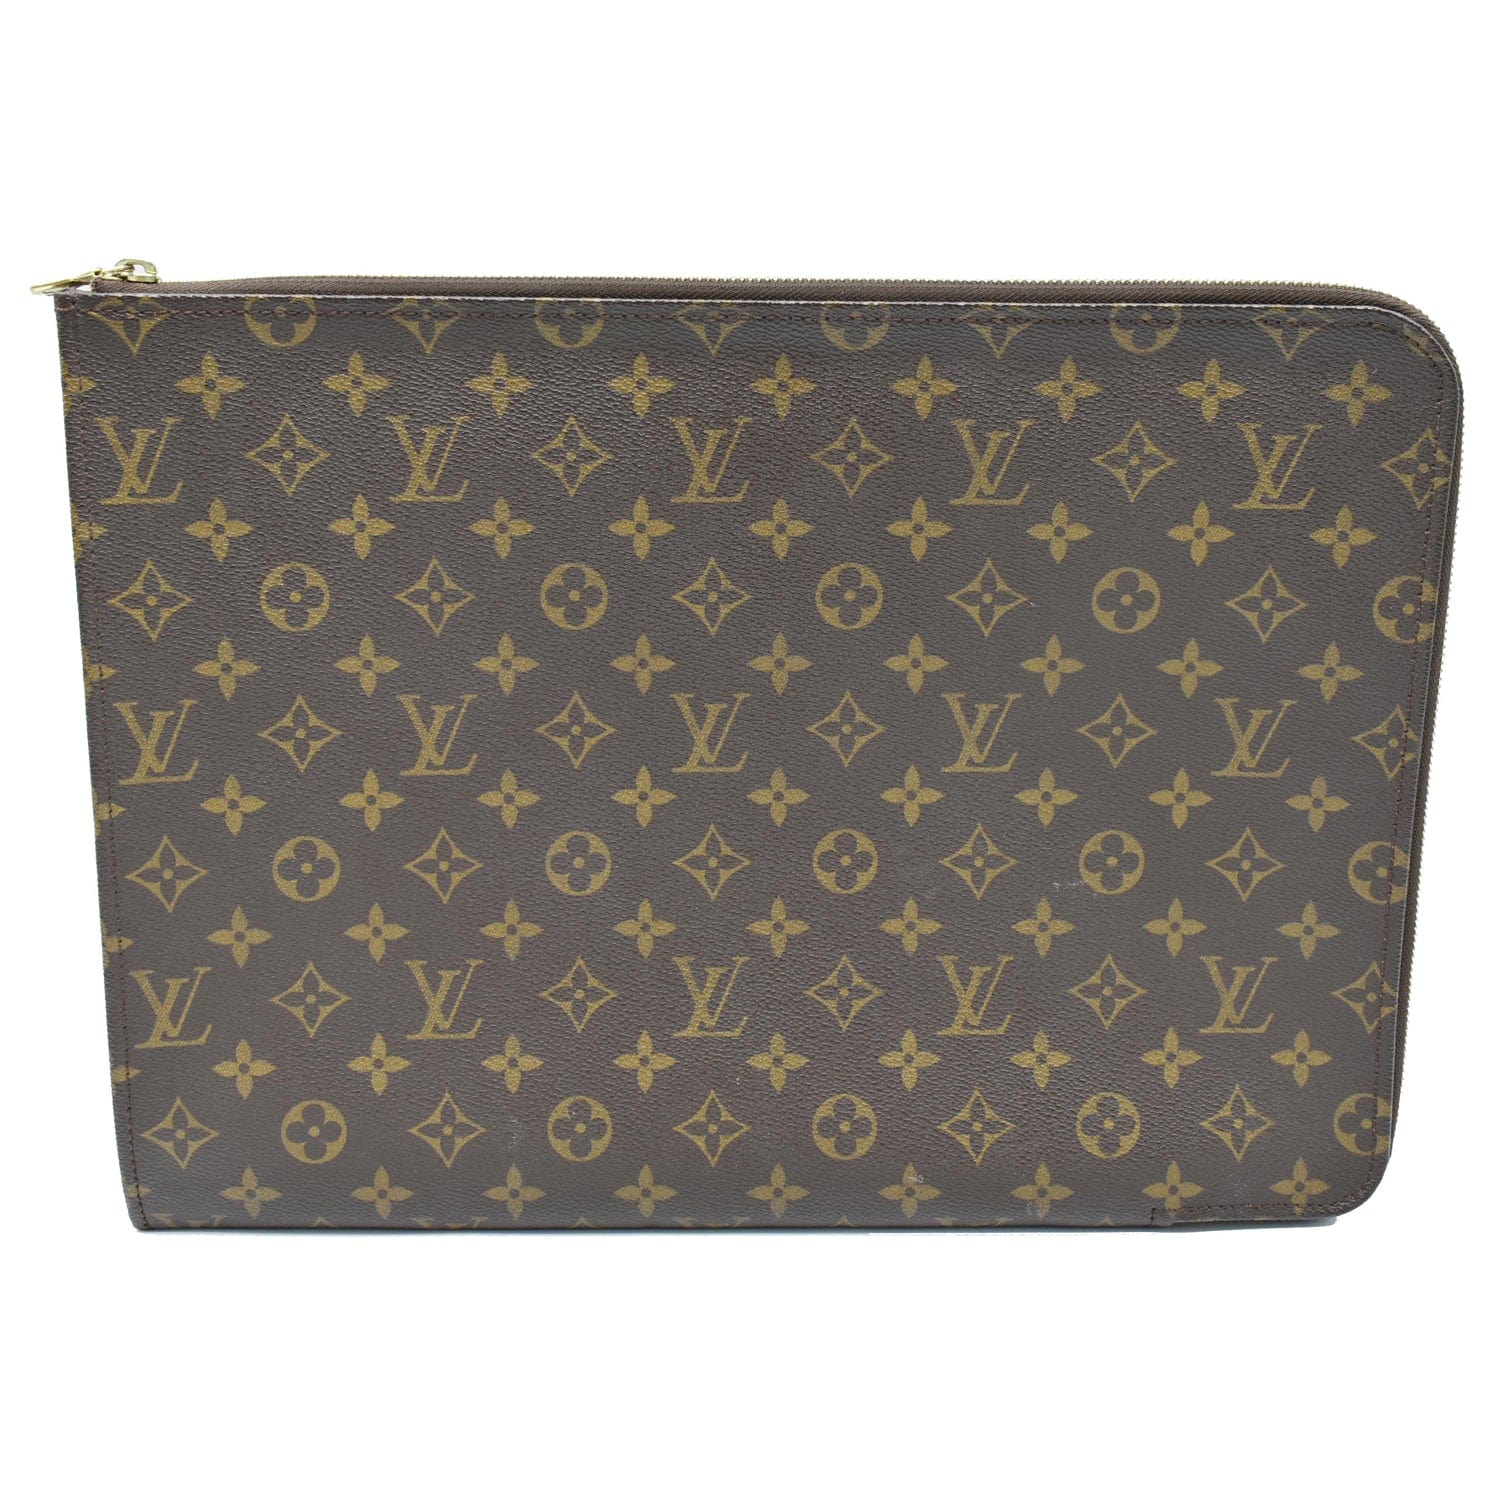 Louis Vuitton Portfolio bag  Cheap louis vuitton handbags, Louis